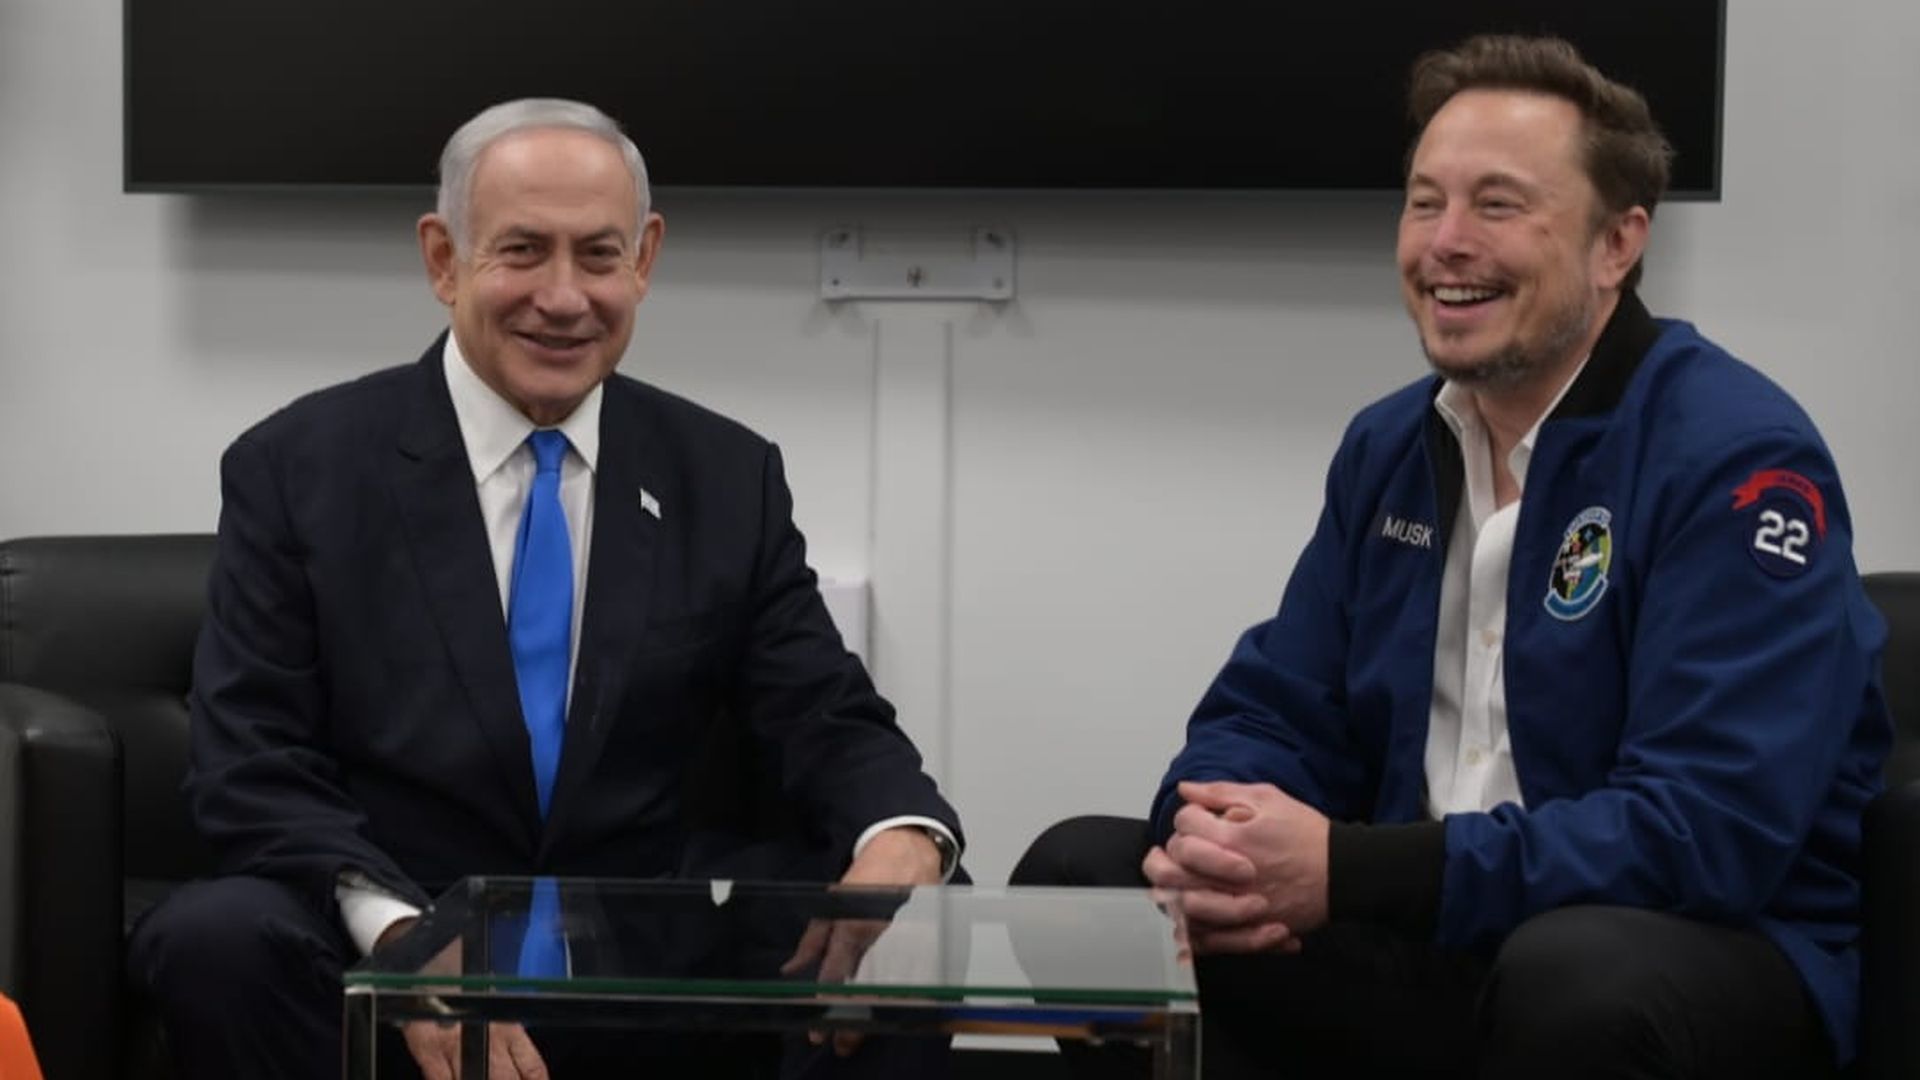 Israel's PM Netanyahu and Elon Musk